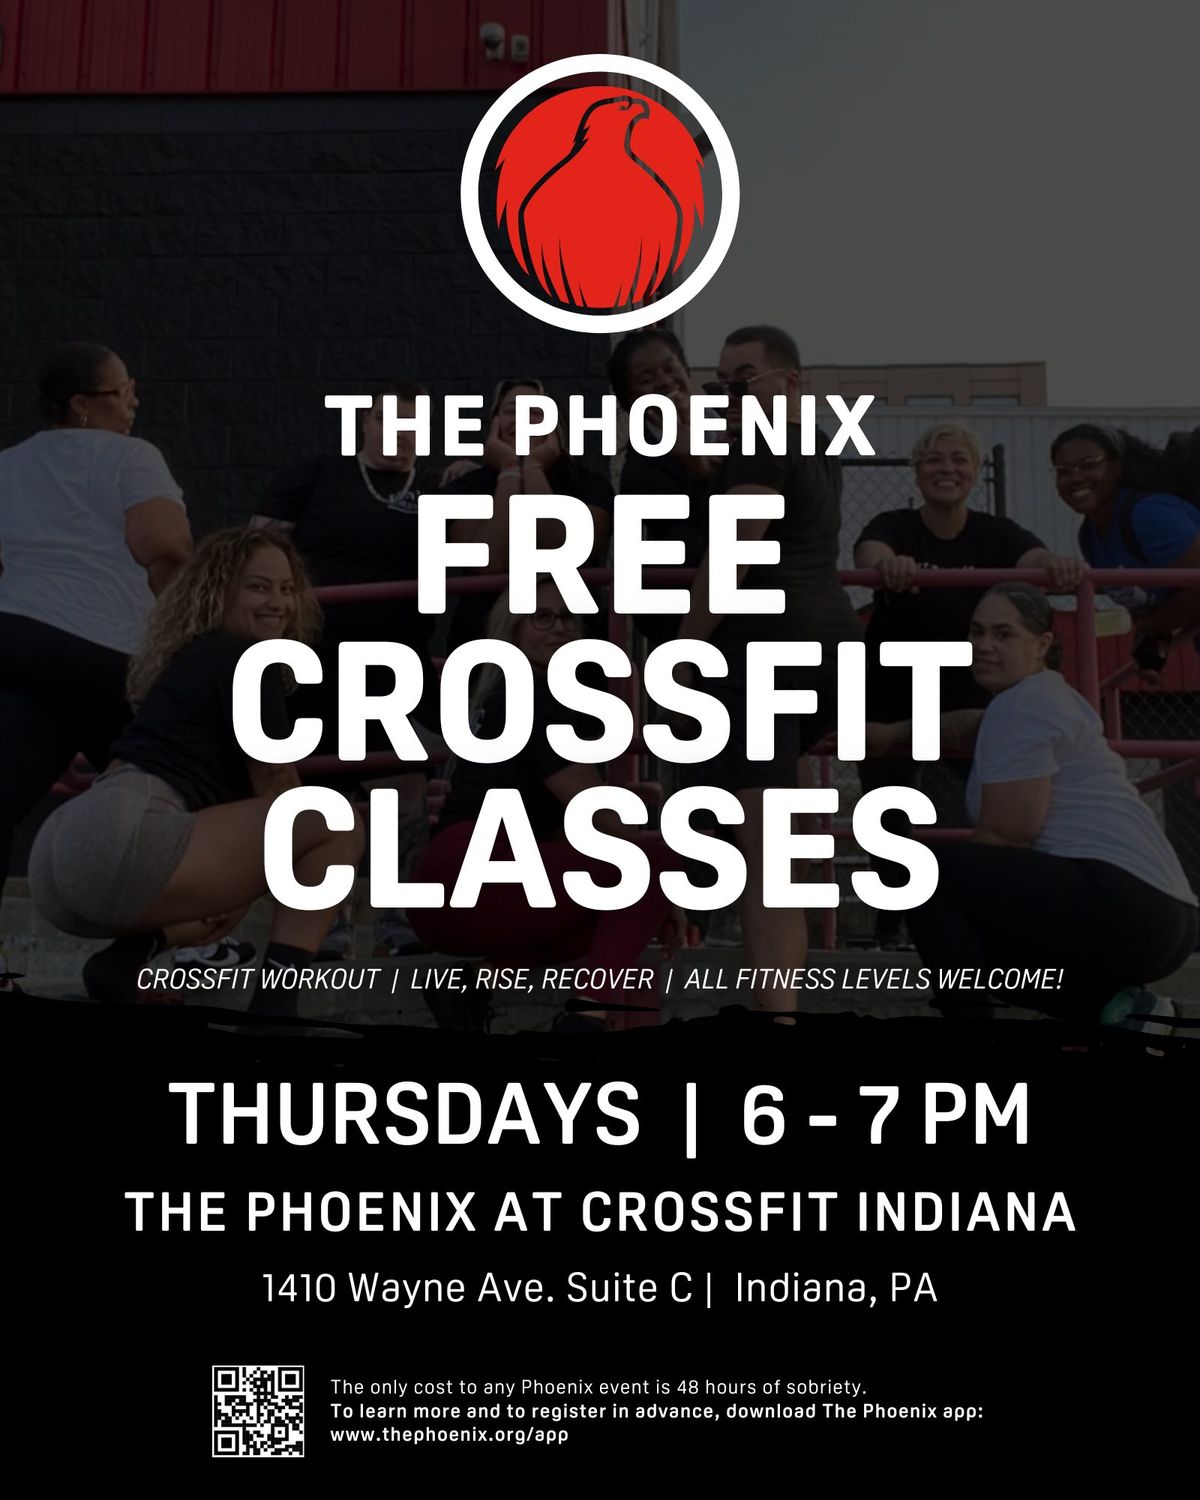 The Phoenix CrossFit